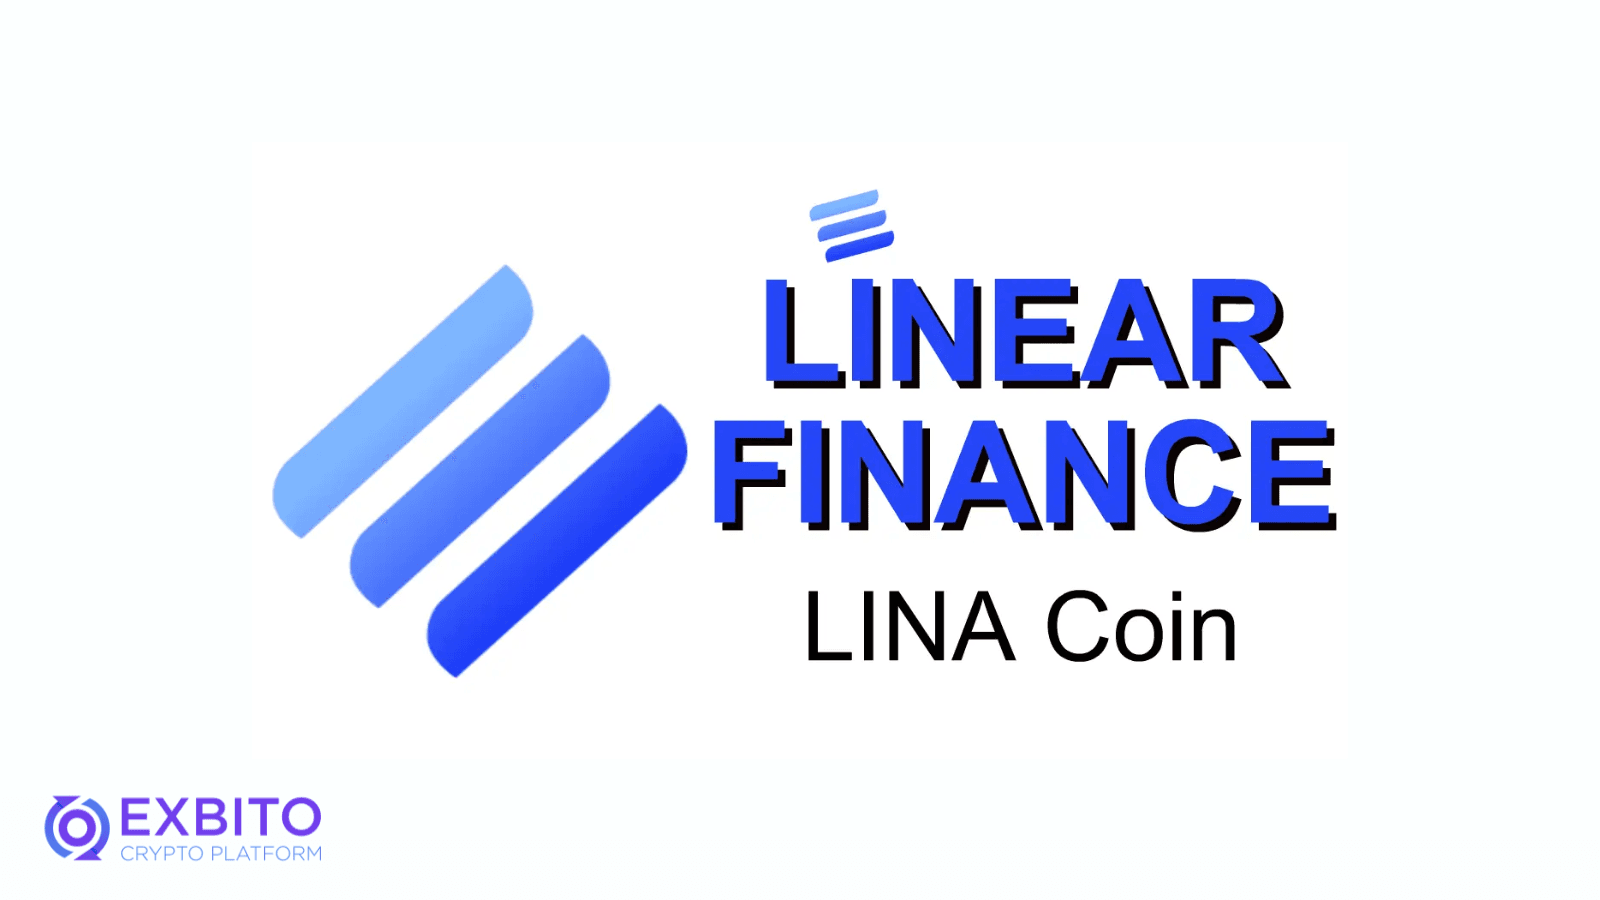 لینیر فایننس (Linear Finance) چیست؟